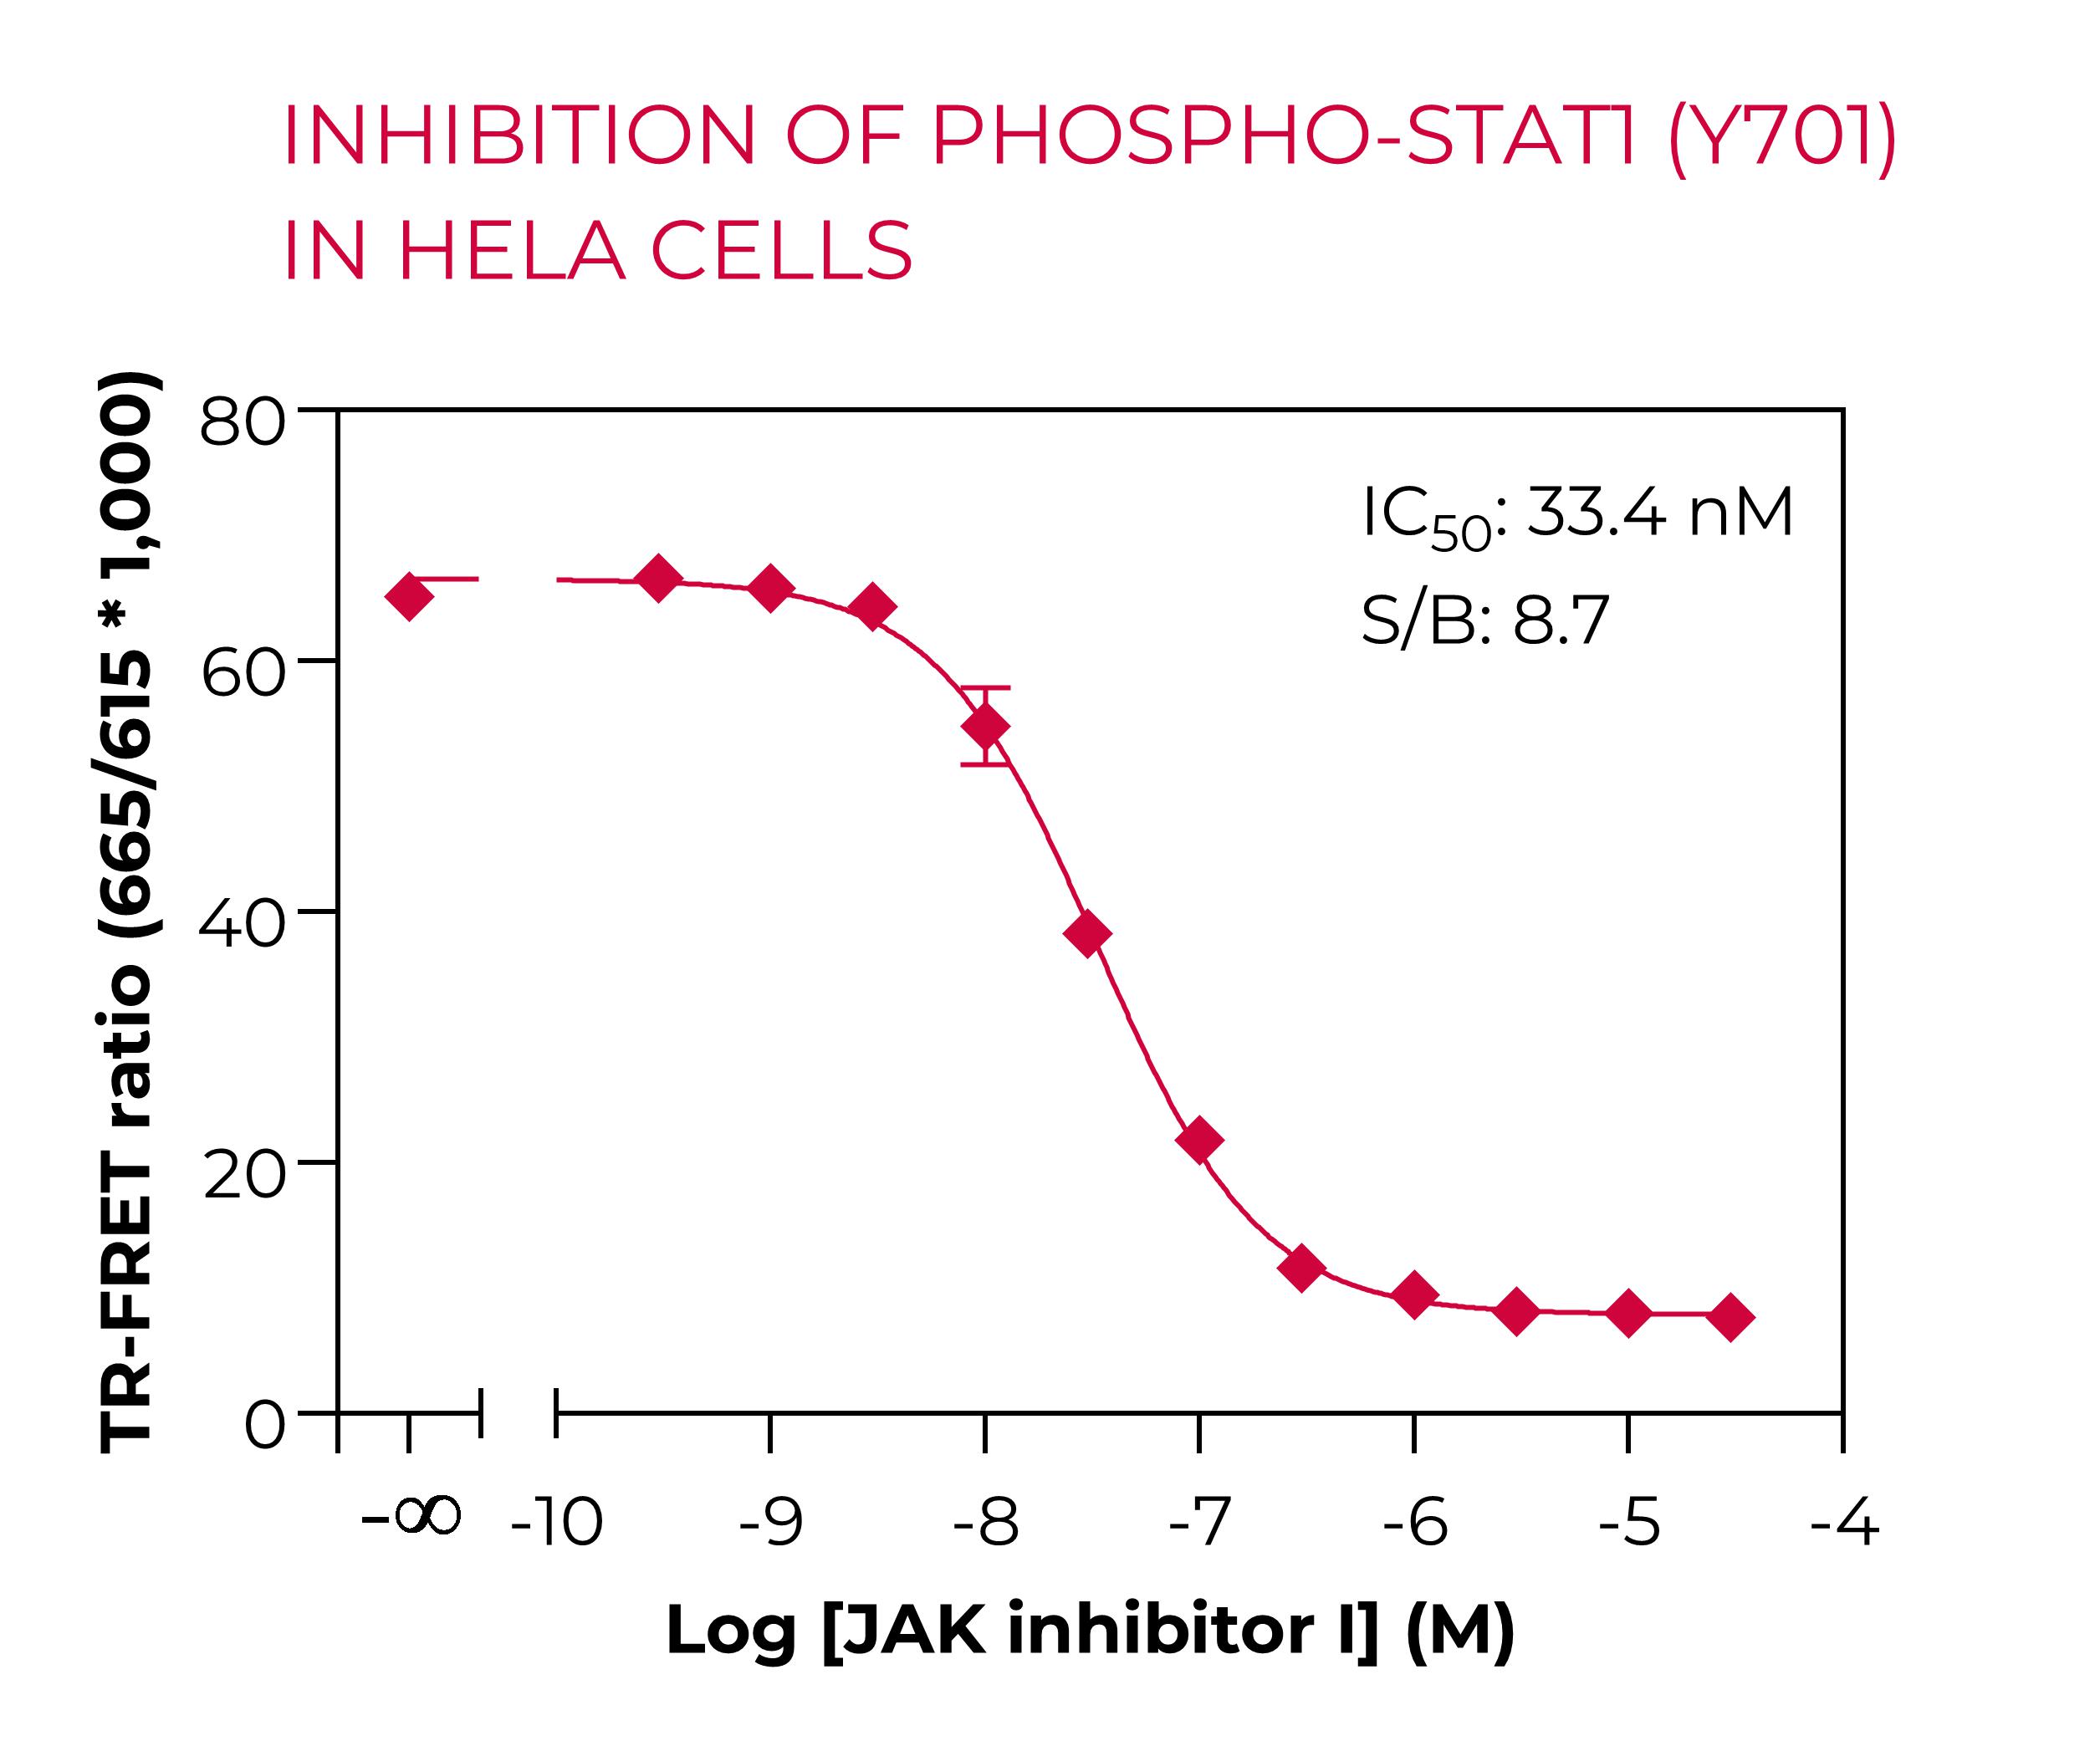 Inhibition of Phospho-STAT1 in HeLa cells